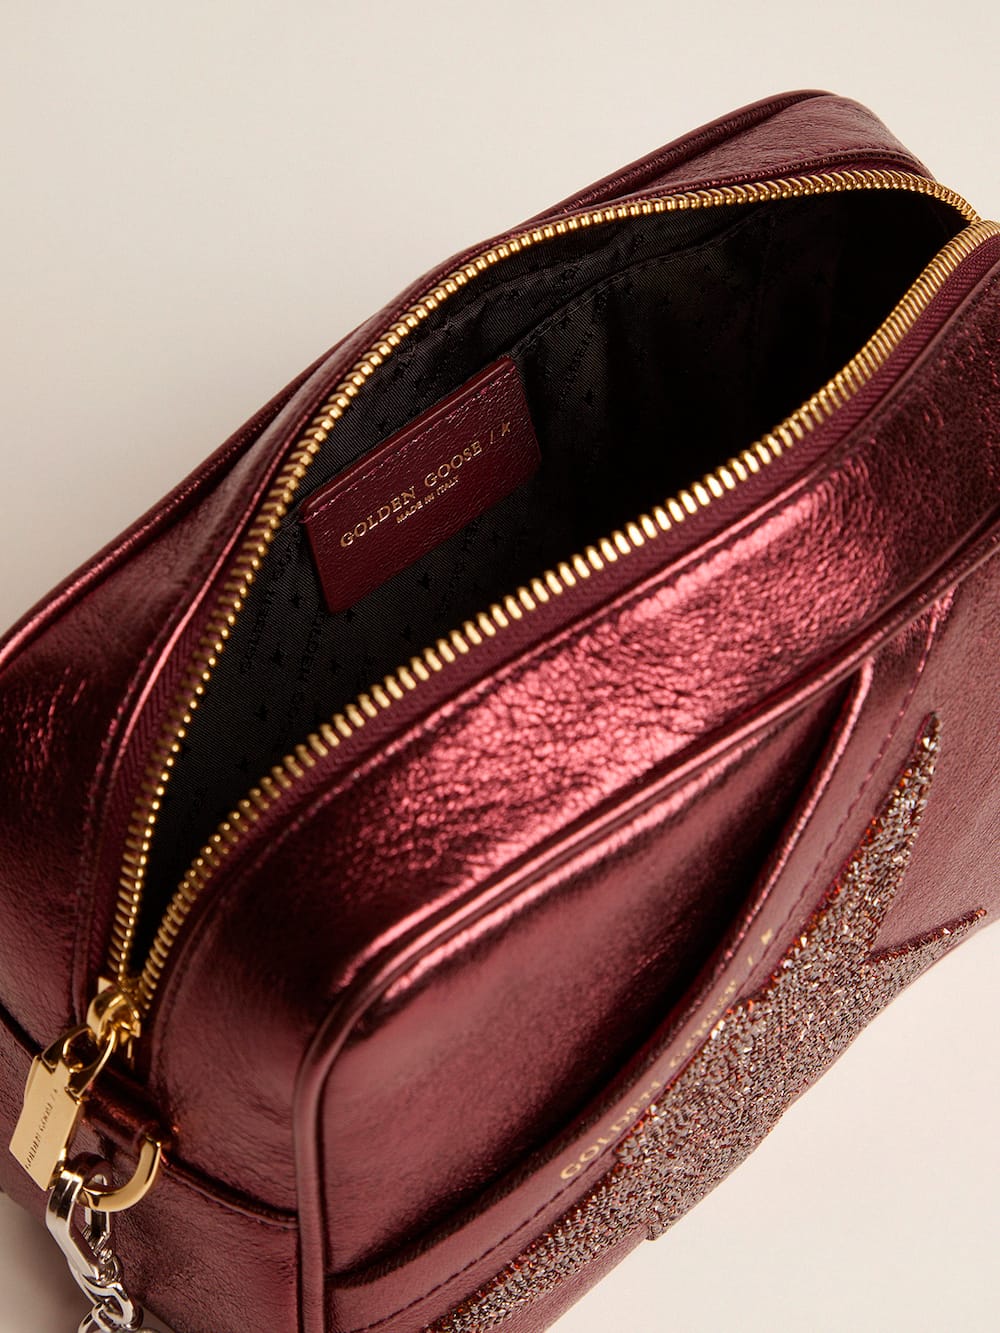 Golden Goose - Sac Star Bag en cuir lamé rouge avec étoile Swarovski in 